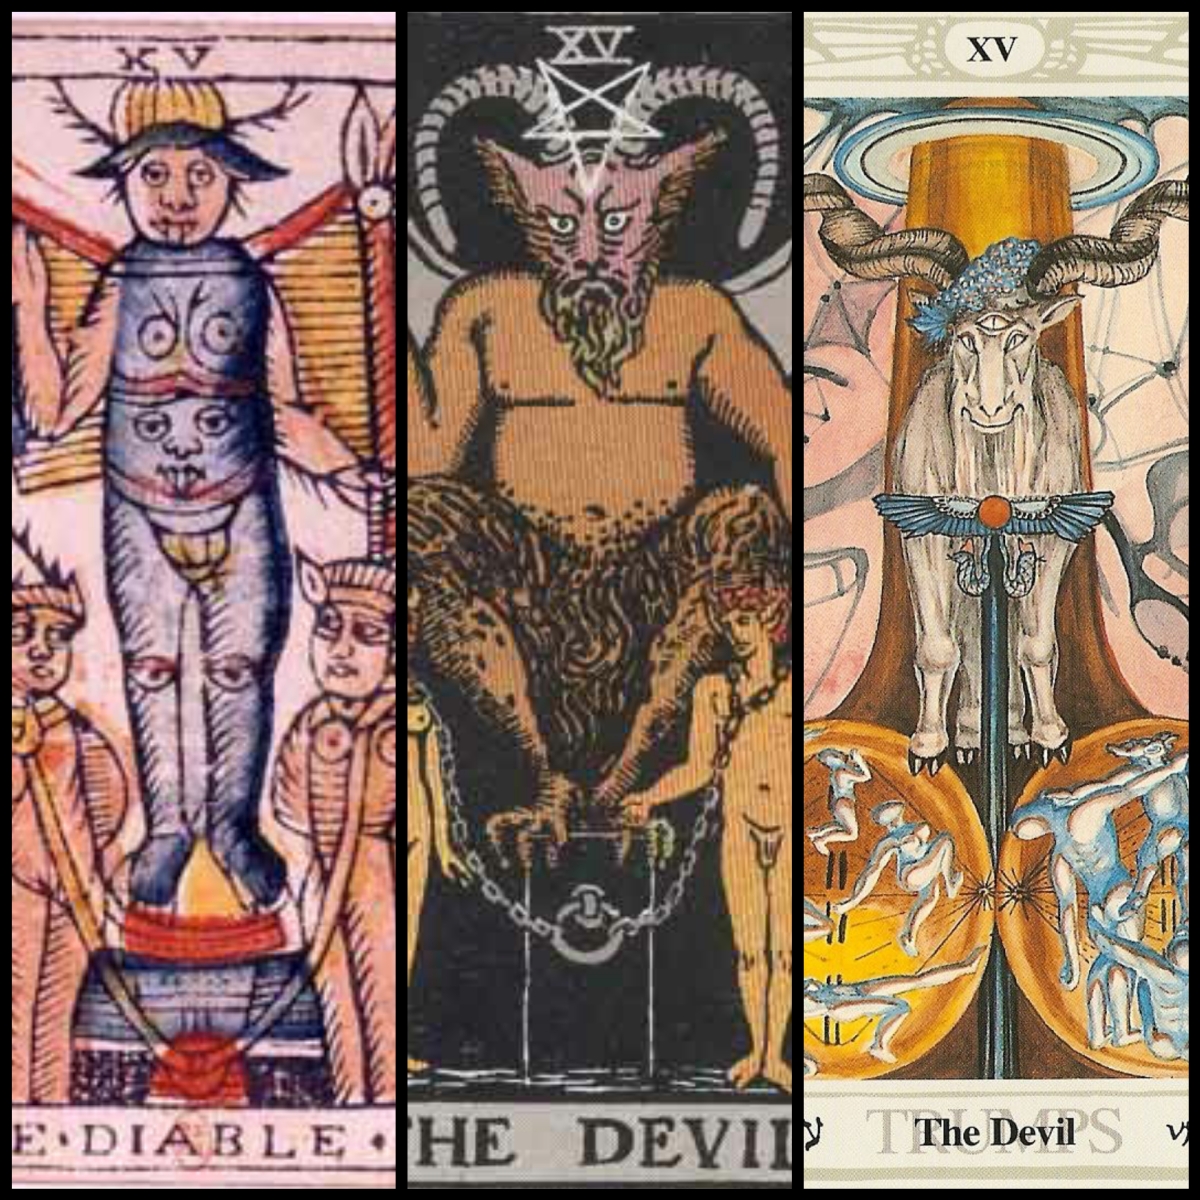 The Devil card and Satanic Feminism.